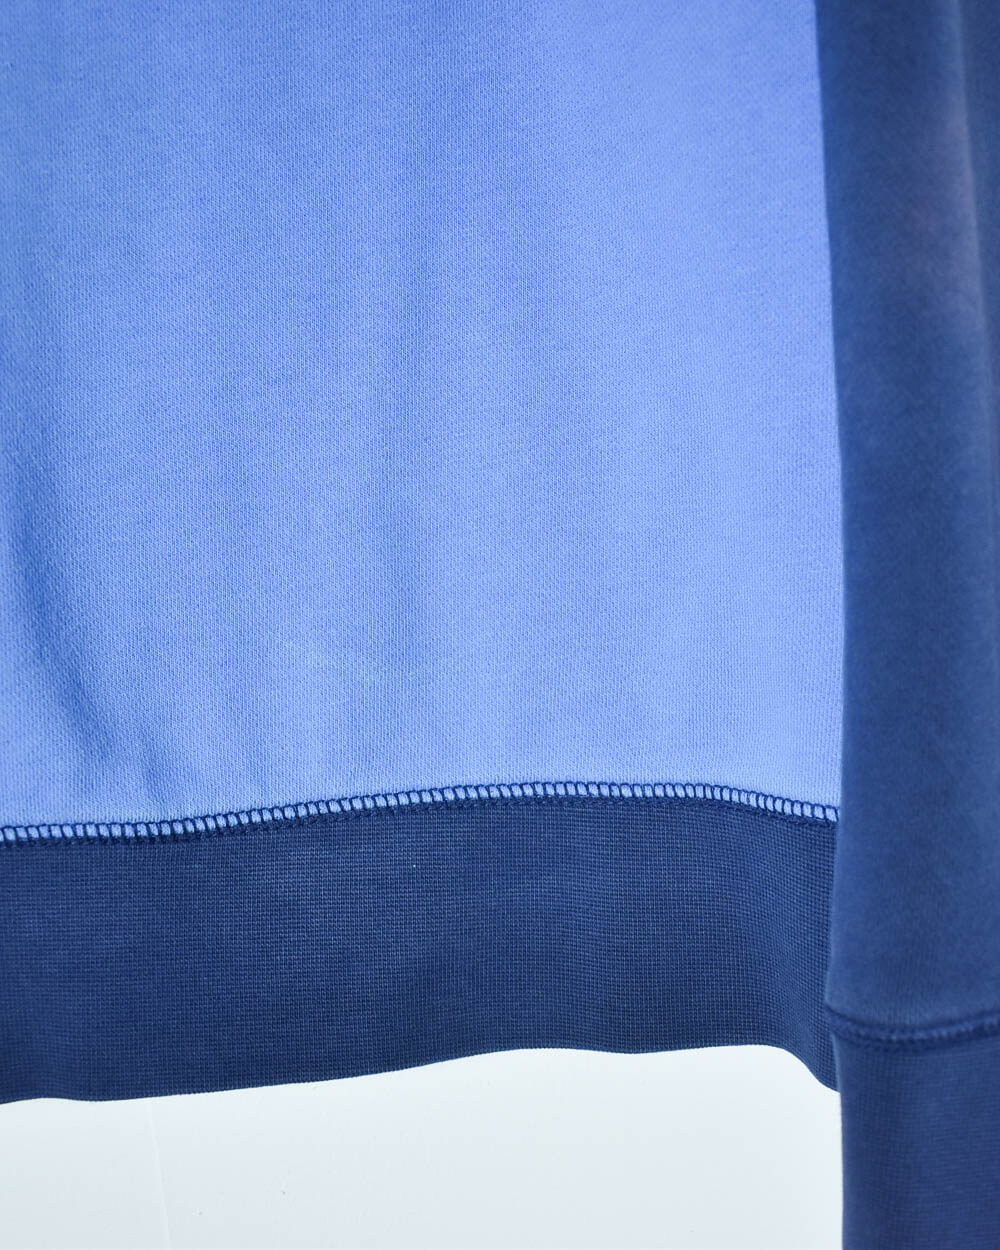 Blue Nike Air Sweatshirt - Small